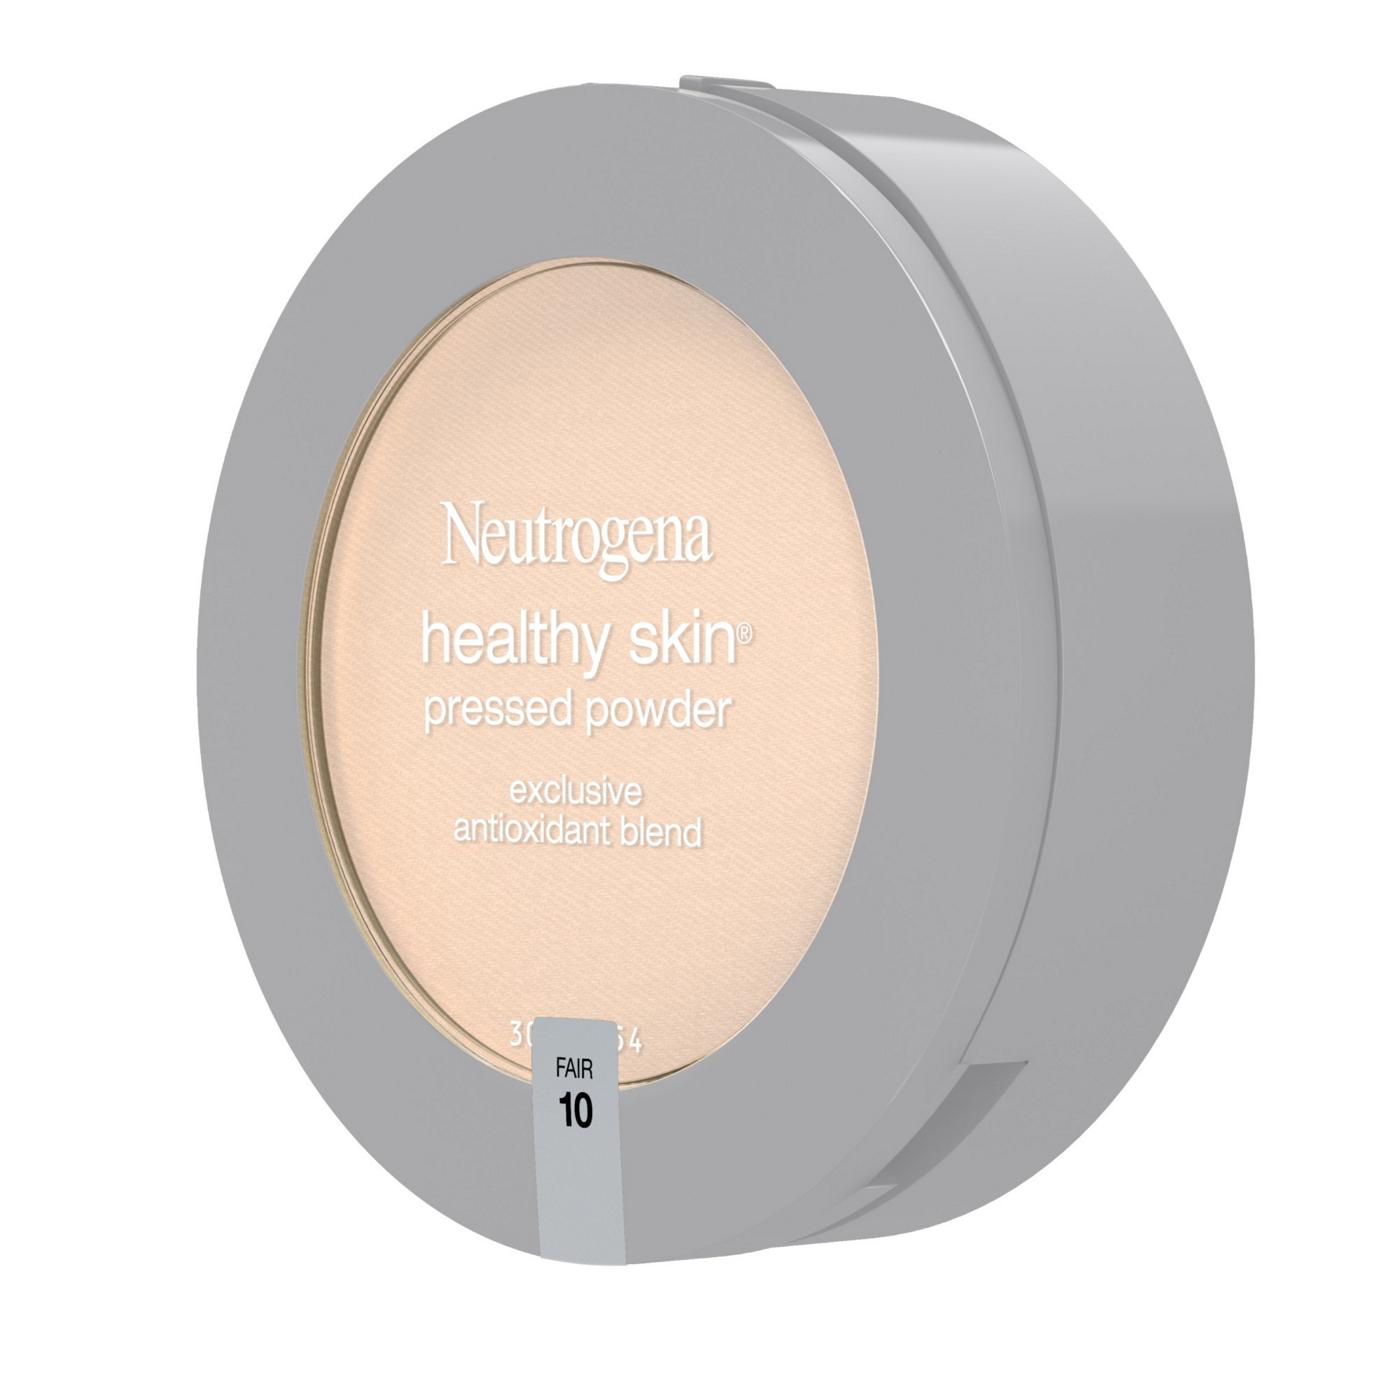 Neutrogena Healthy Skin Pressed Powder 10 Fair; image 3 of 5